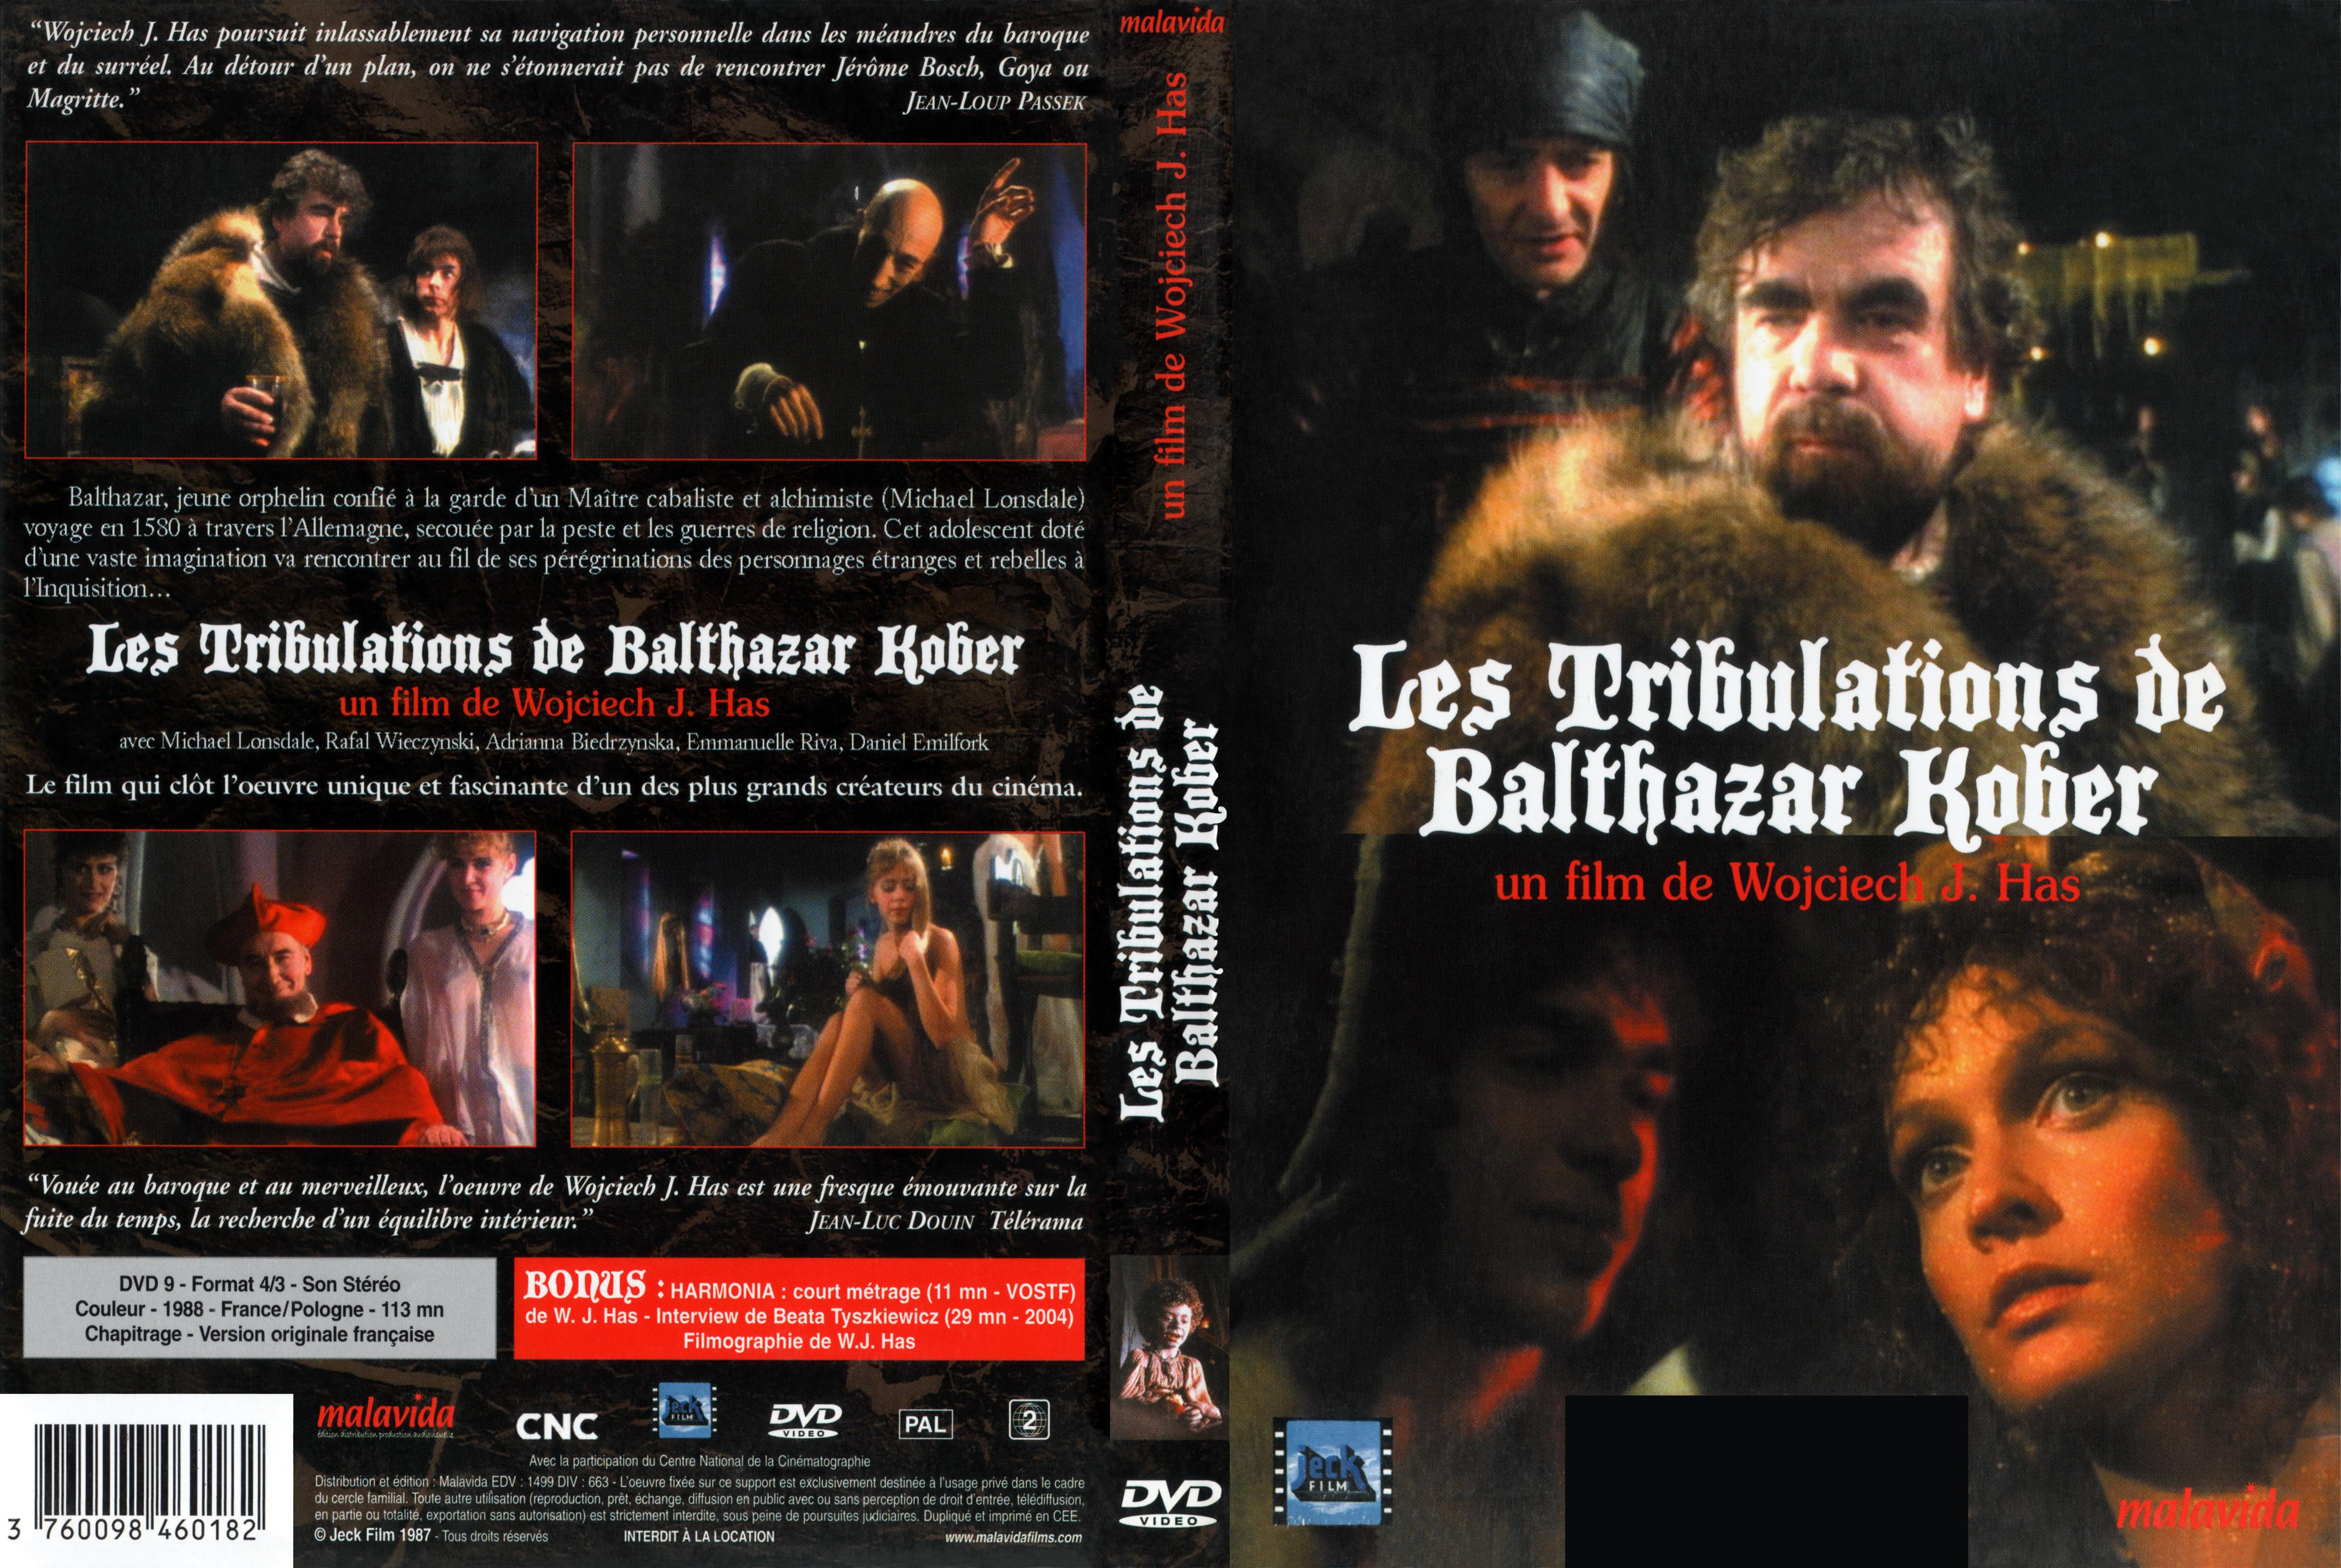 Jaquette DVD Les Tribulations de Balthazar Kober